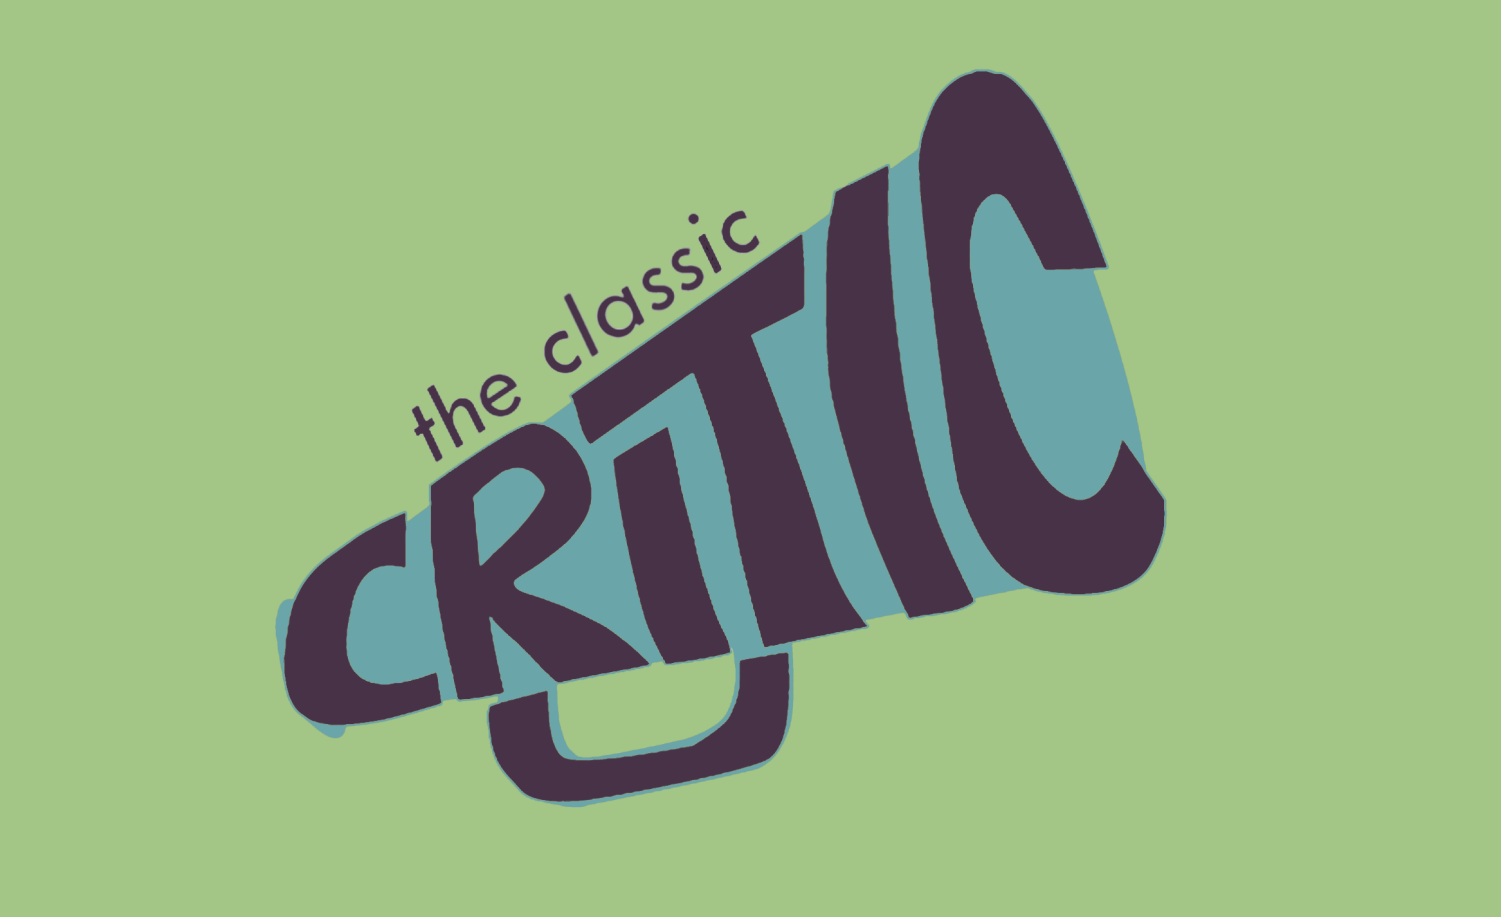 The Classic Critic